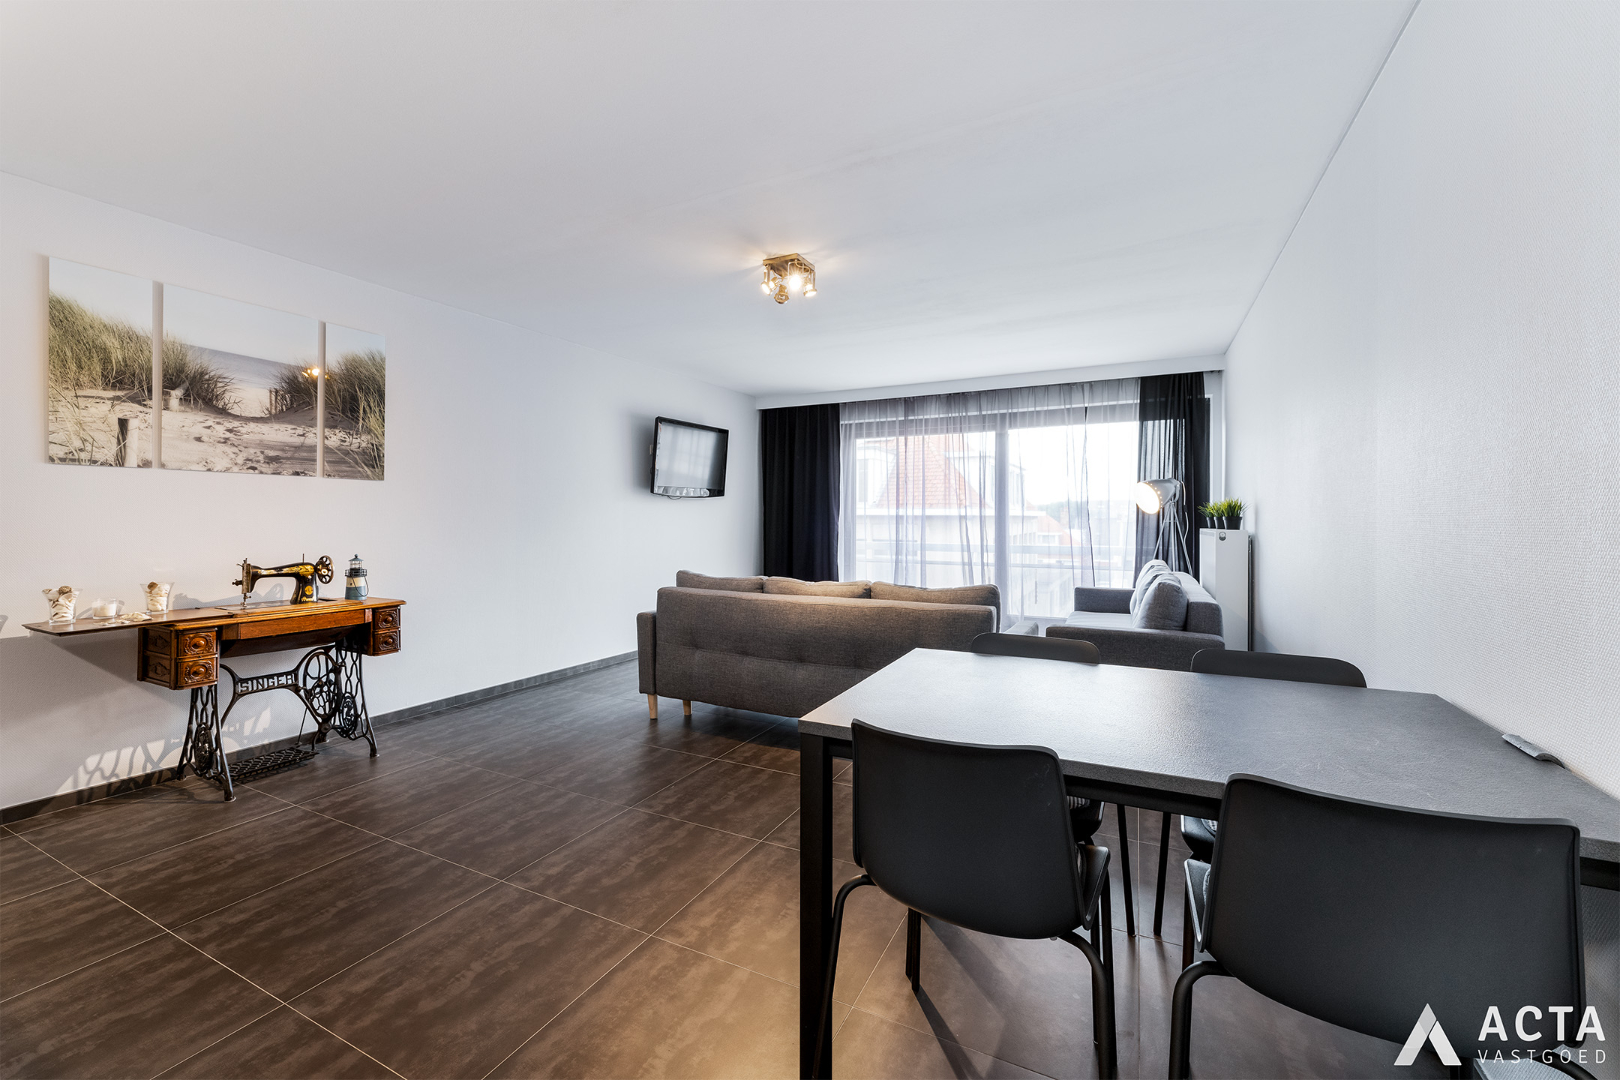 Prachtig gerenoveerd appartement met twee slaapkamers in Mariakerke! 